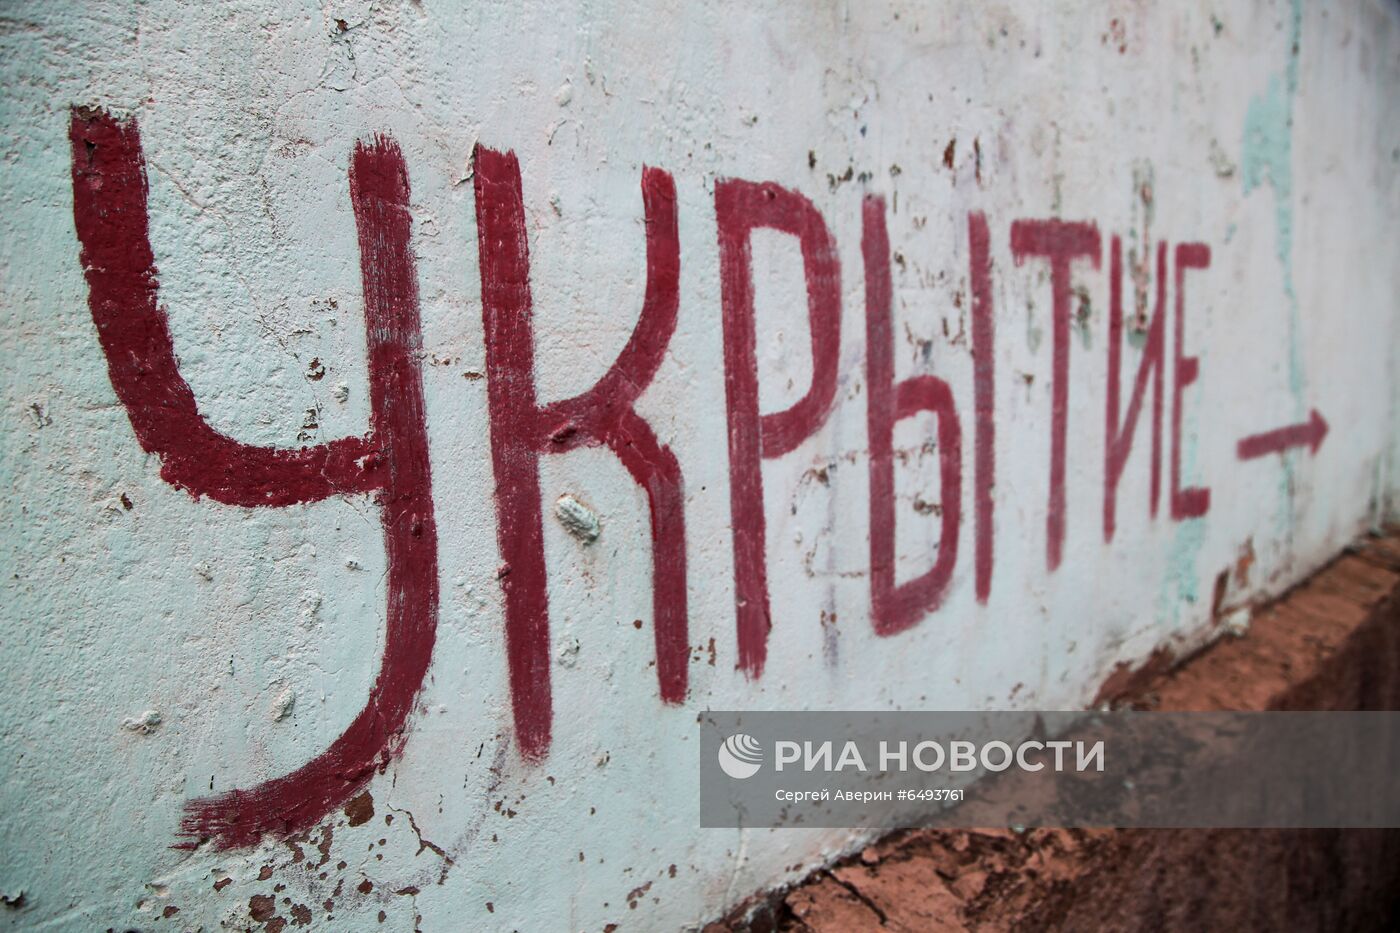 Бомбоубежища на линии разграничения в Донецкой области 